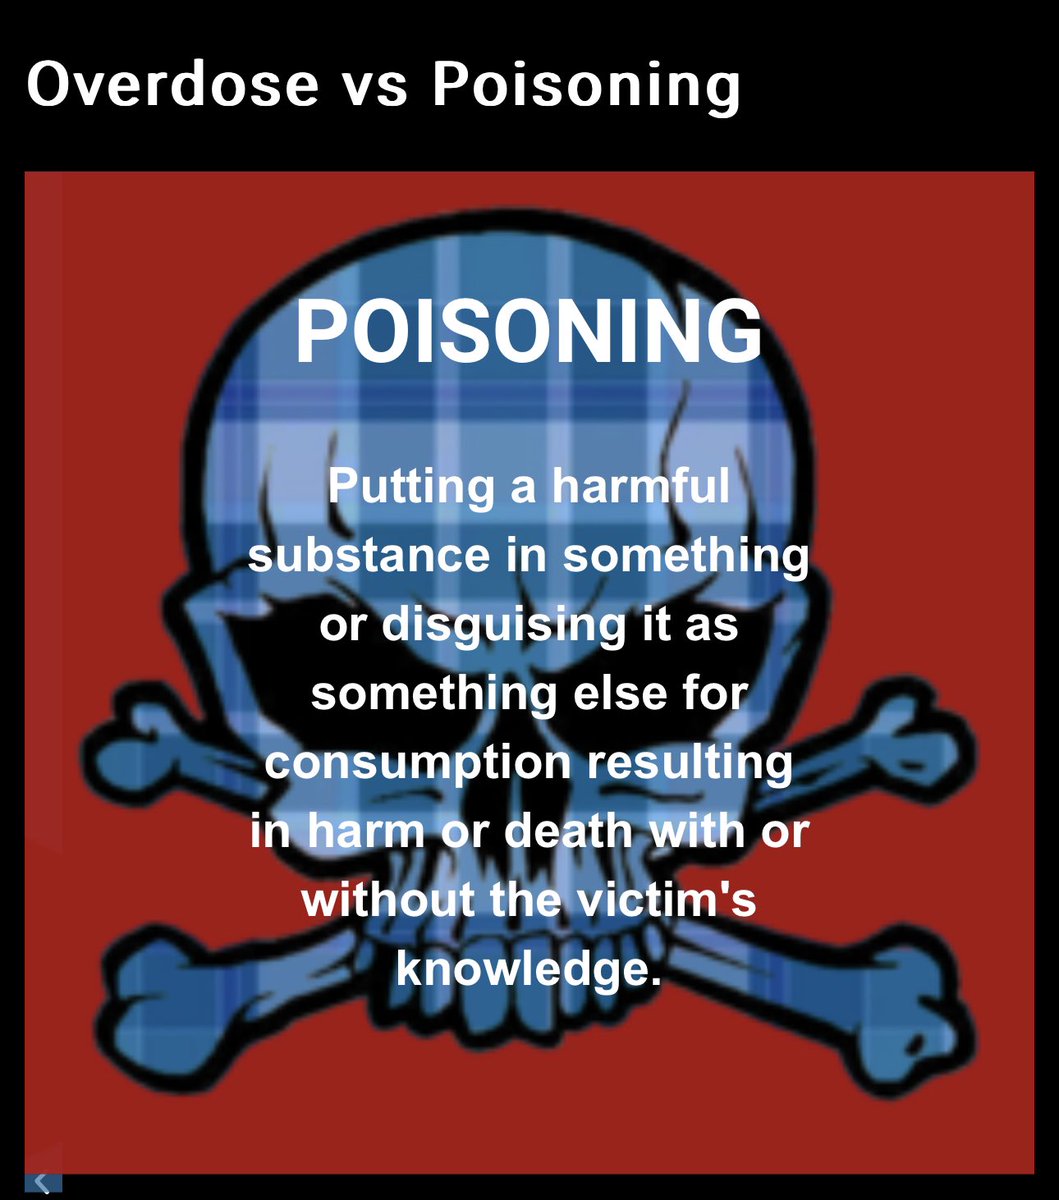 Overdose vs poisoning #fentanylawareness #fentanylpoisoning Not Overdose is killing a generation ‼️Parents be aware #justknow #onepillcankill